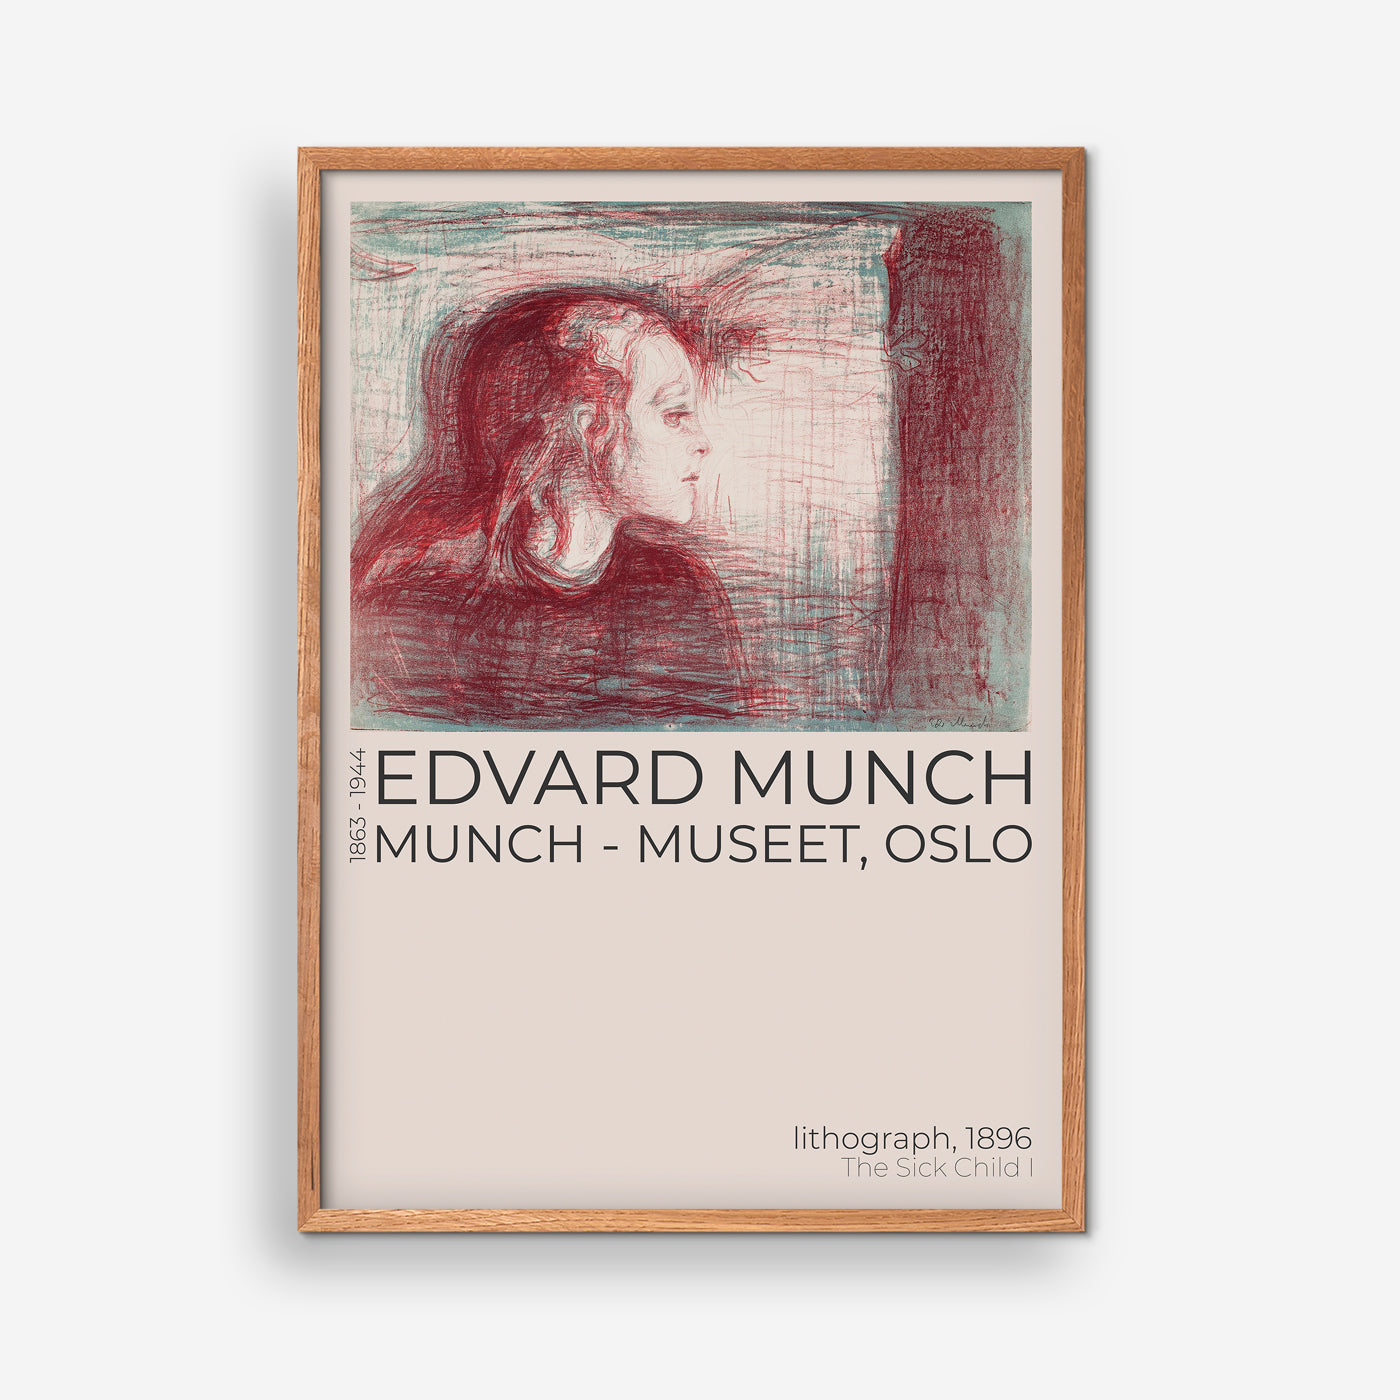 Edvard Munch plakat The sick child